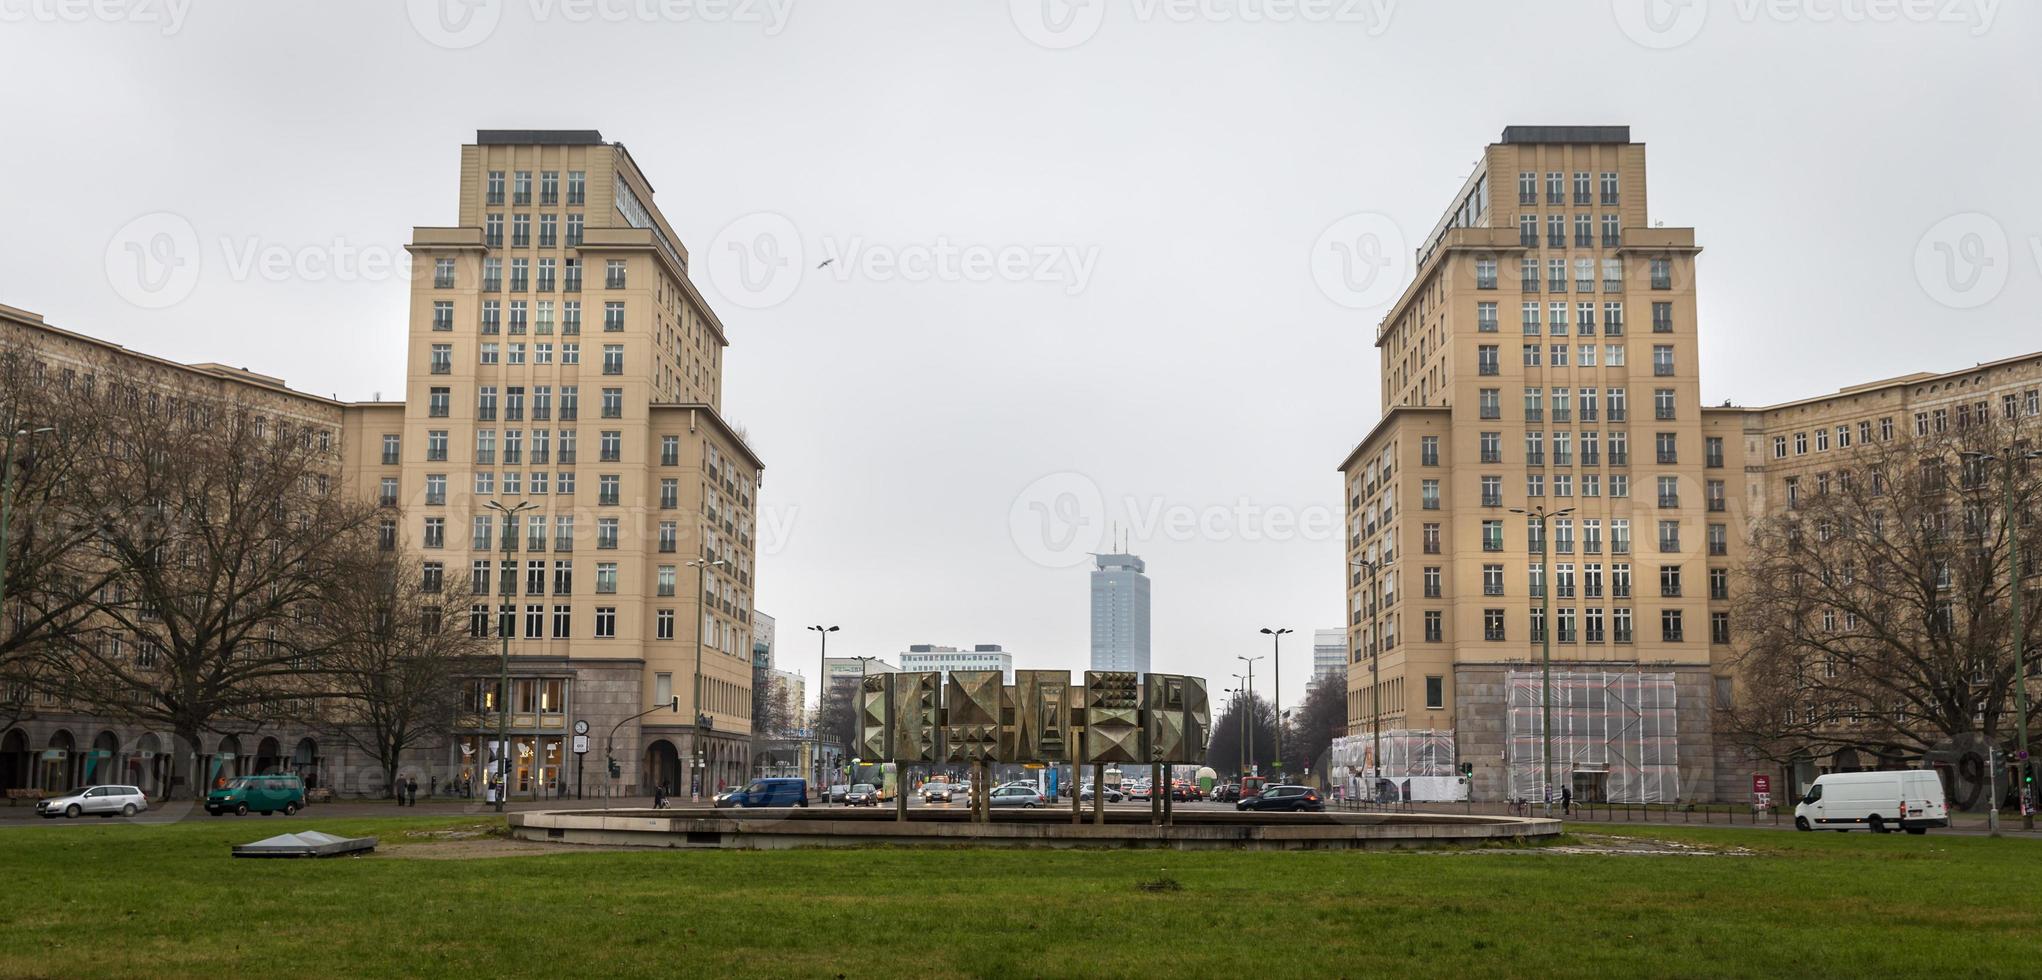 Edificios en Strausberger Platz, Berlín, Alemania foto